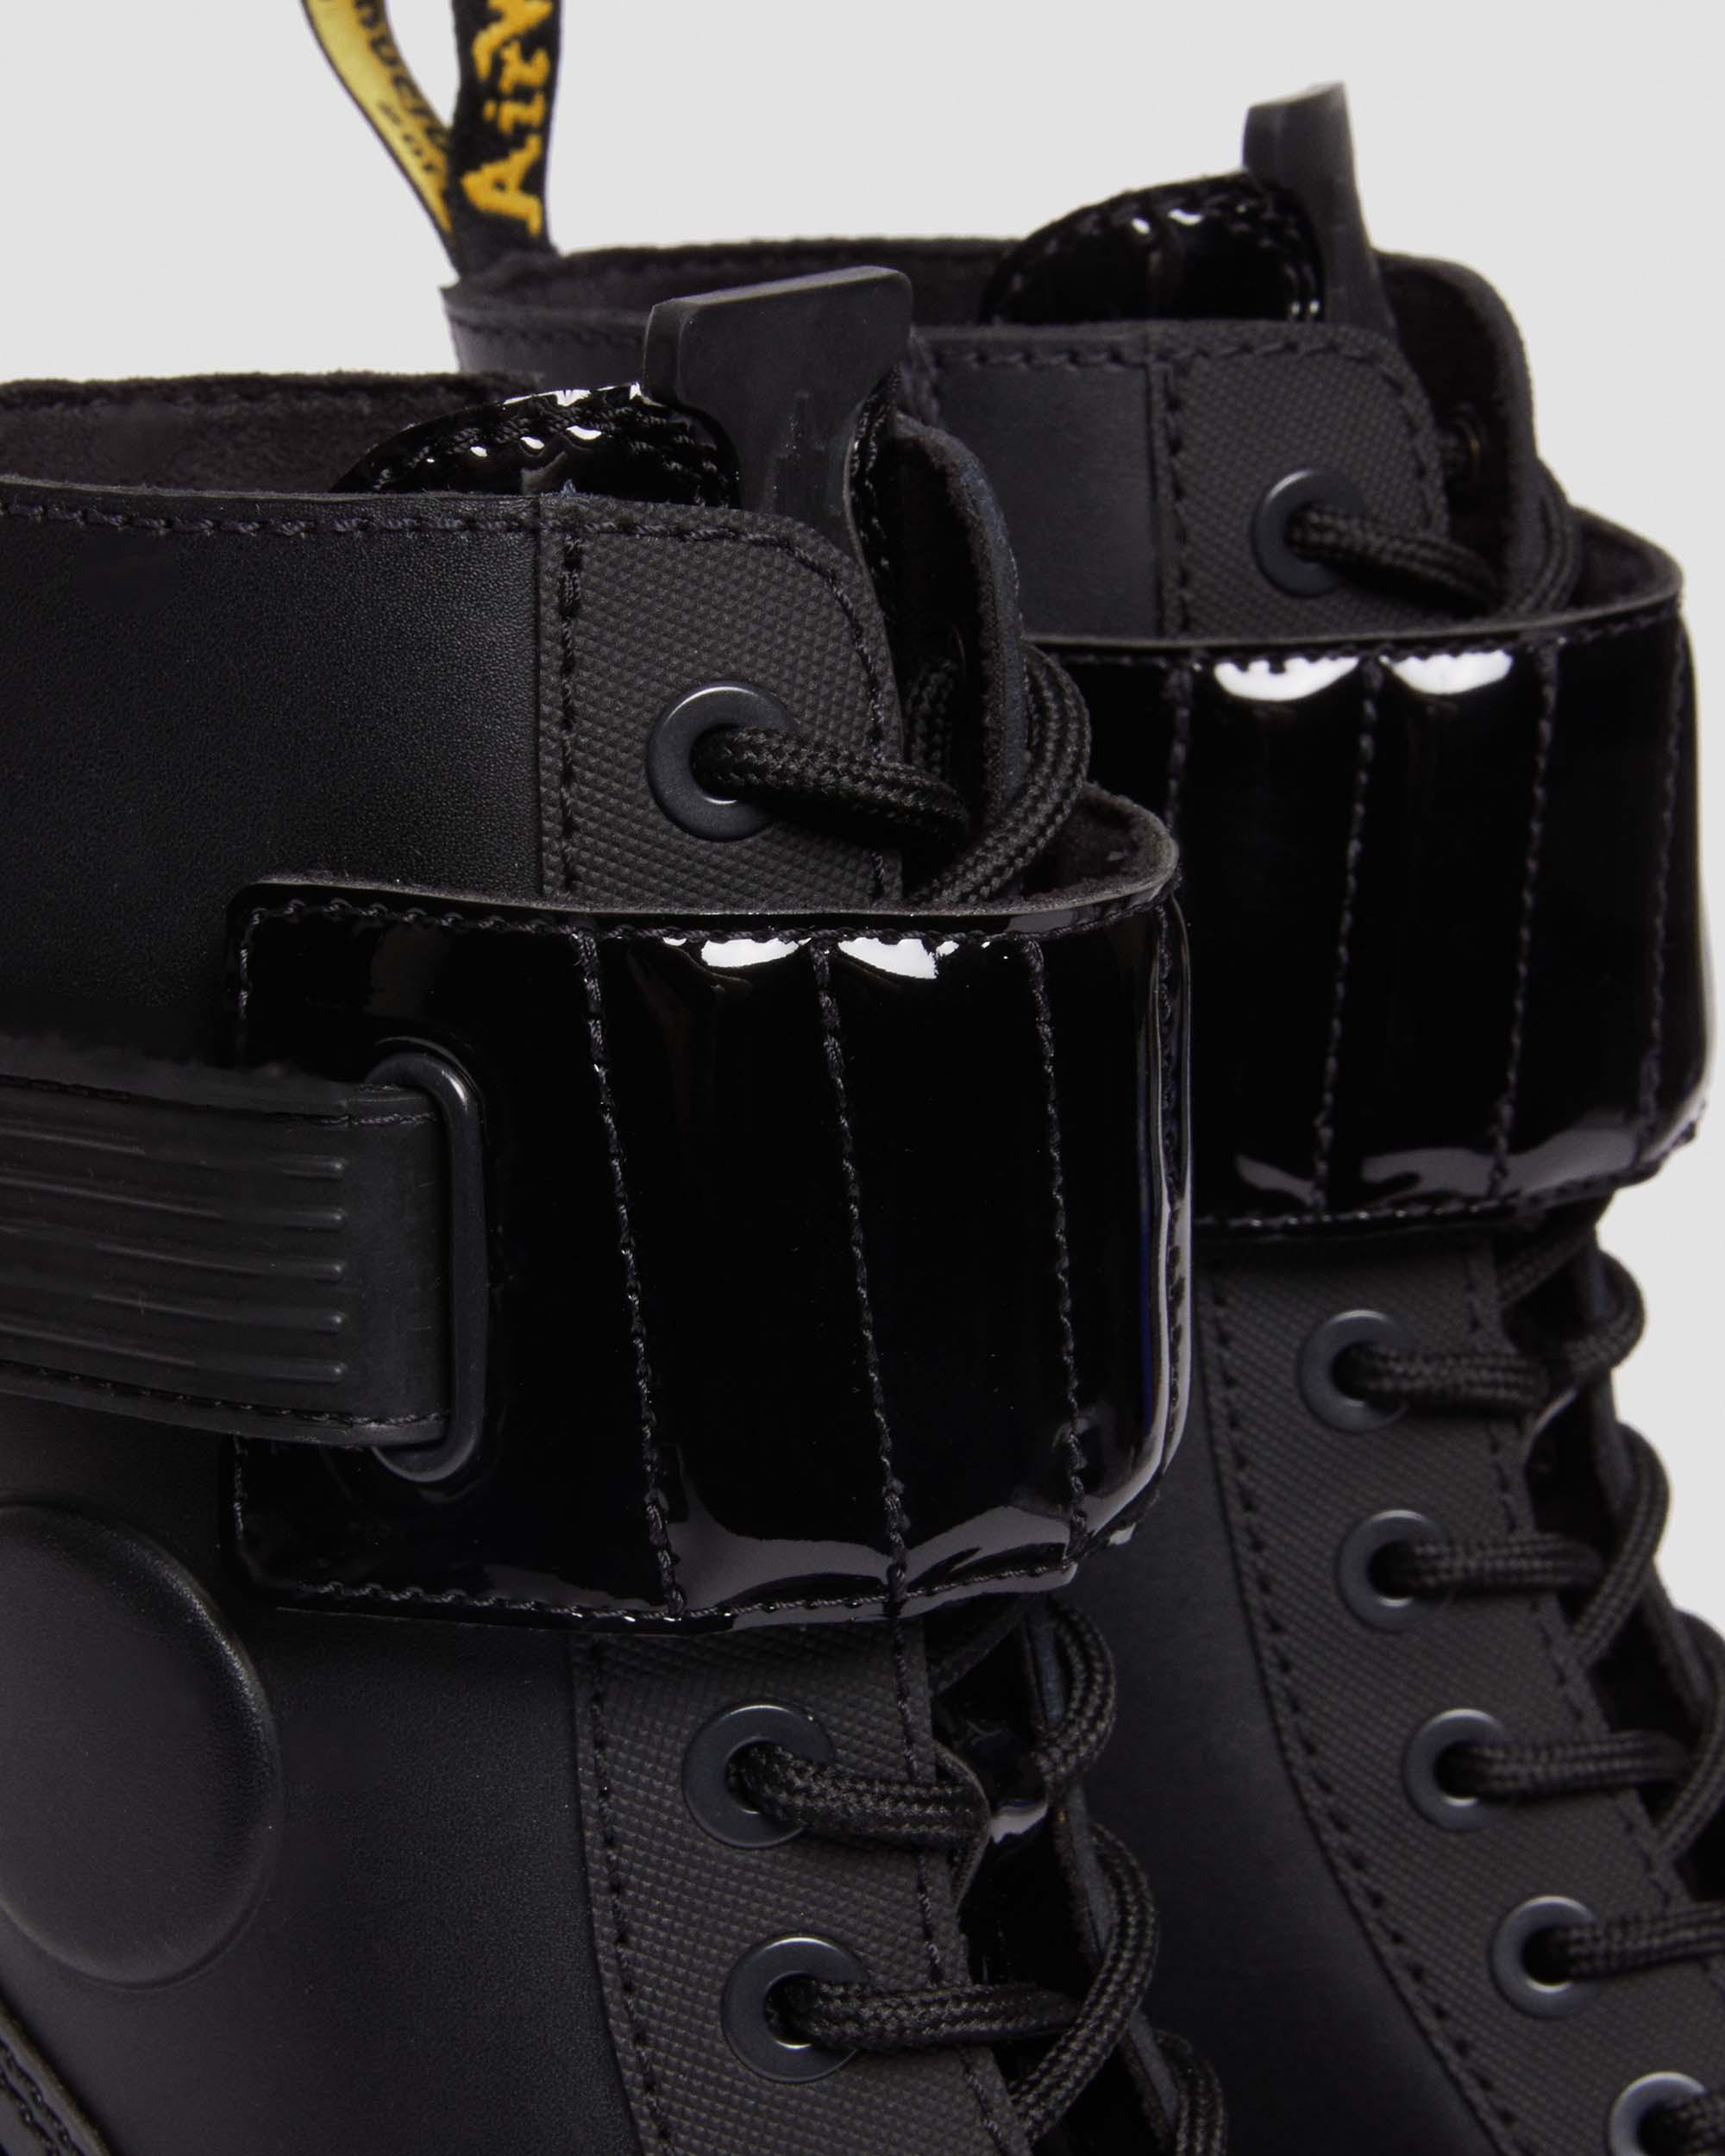 Gaya 10i Leather Heeled Boots in BLACK